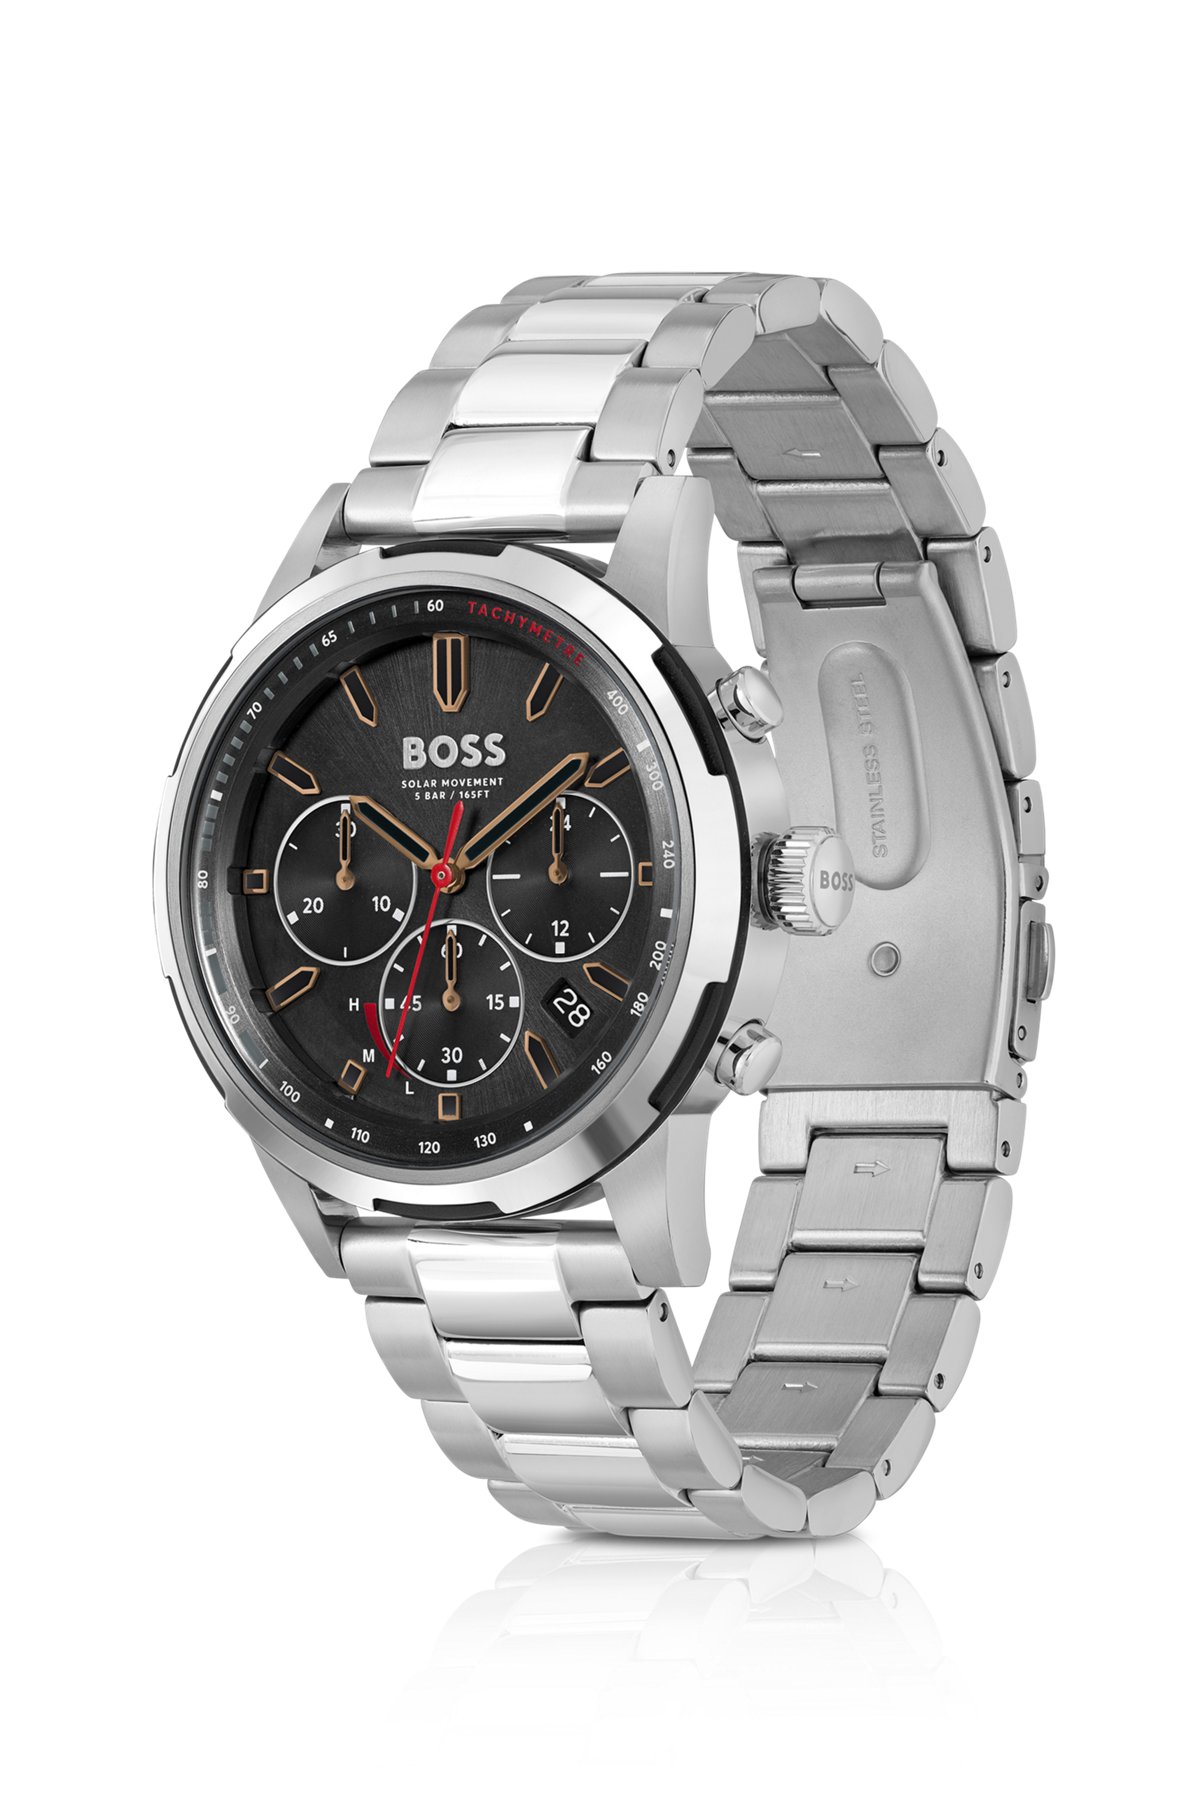 BOSS - Solar-powered chronograph watch with steel bracelet